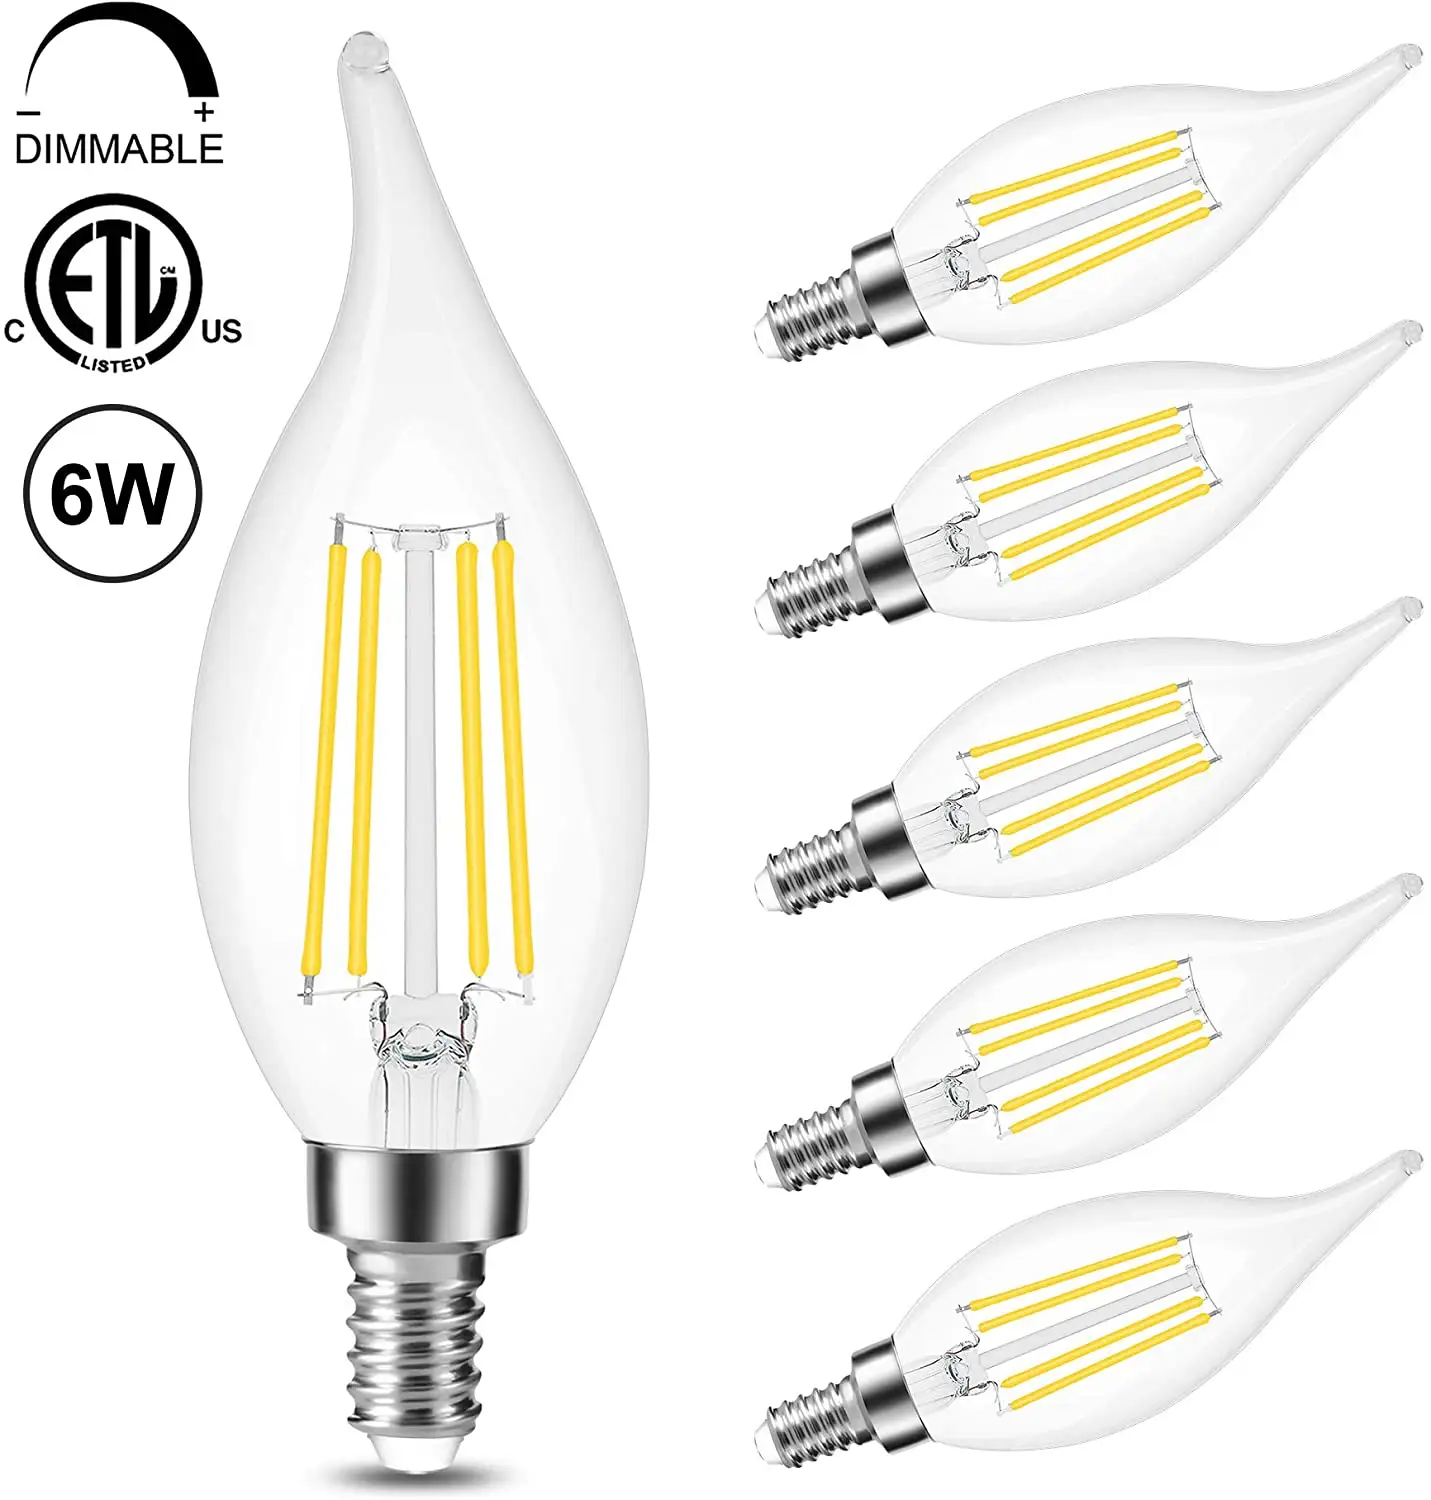 US Market Amber Clear 110V 220V Dimmable C35 C35T C37 B11 B10 E12 E14 2W 4W 5W Edison Filament Candle Bulbs Candle Lights